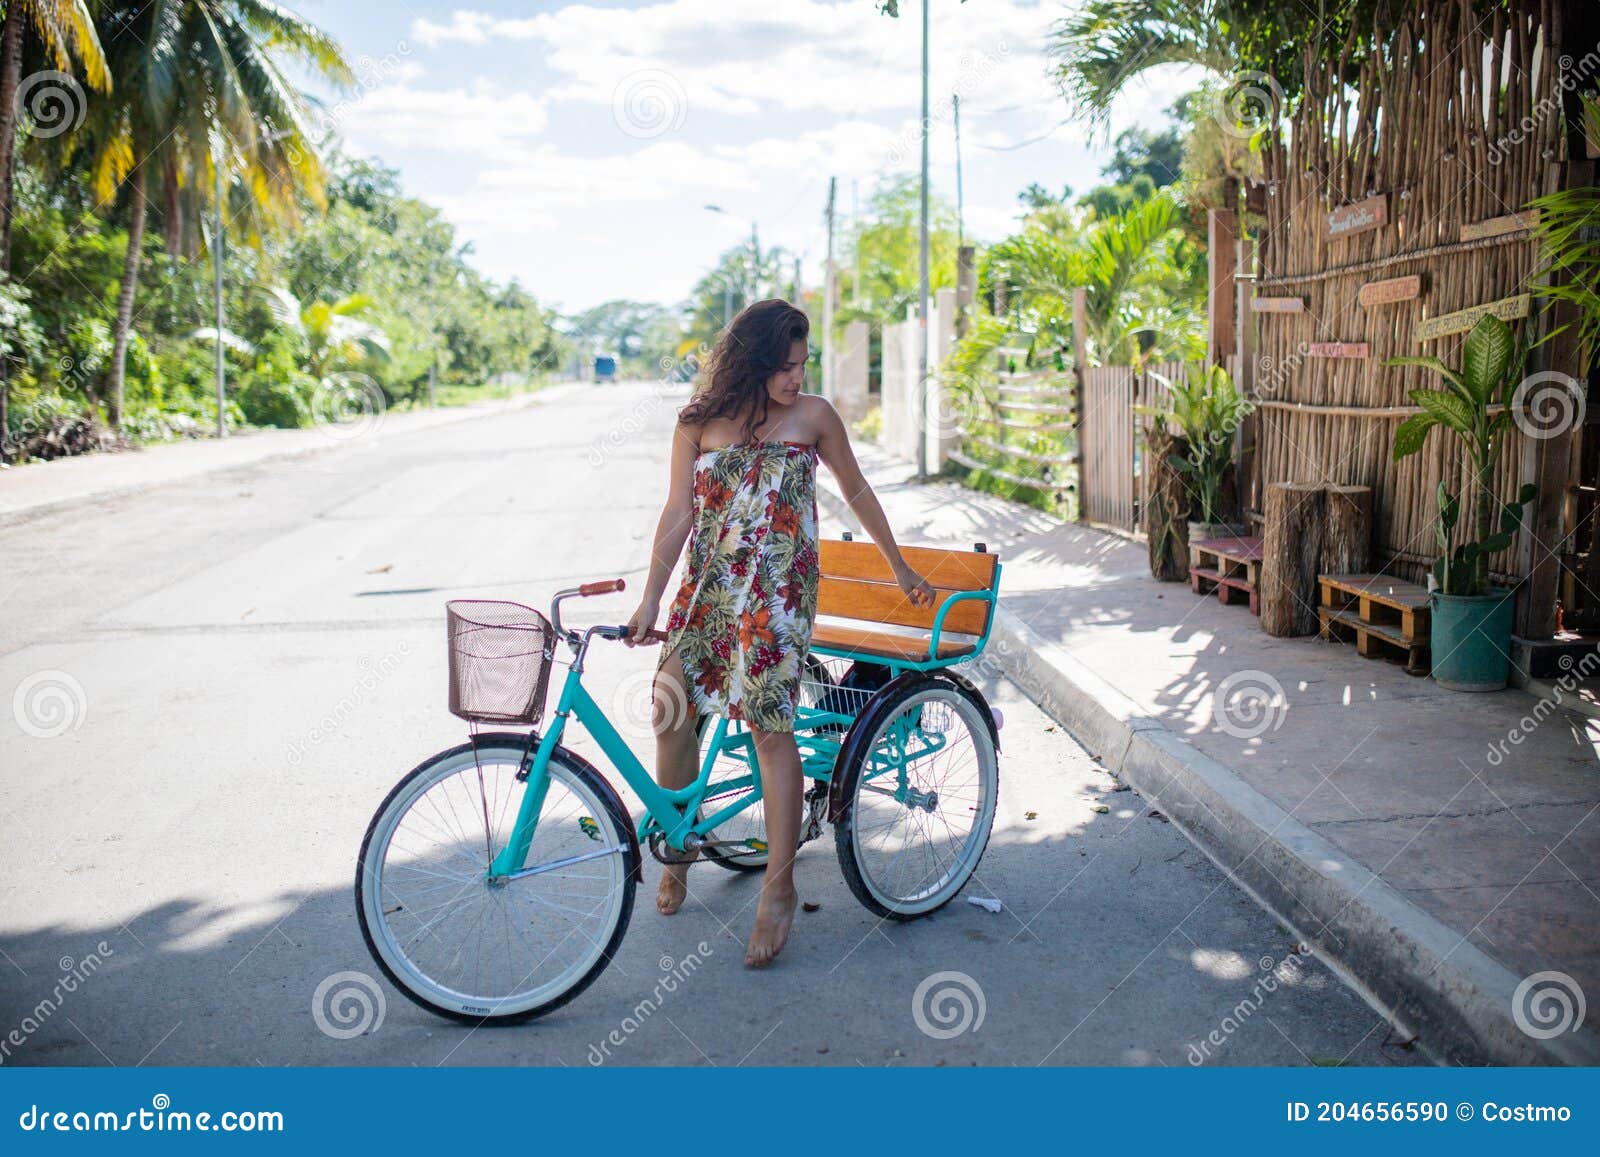 https://thumbs.dreamstime.com/z/beautiful-woman-wearing-flowered-dress-riding-adult-tricycle-portrait-woman-riding-bike-empy-street-bike-ride-sunny-204656590.jpg